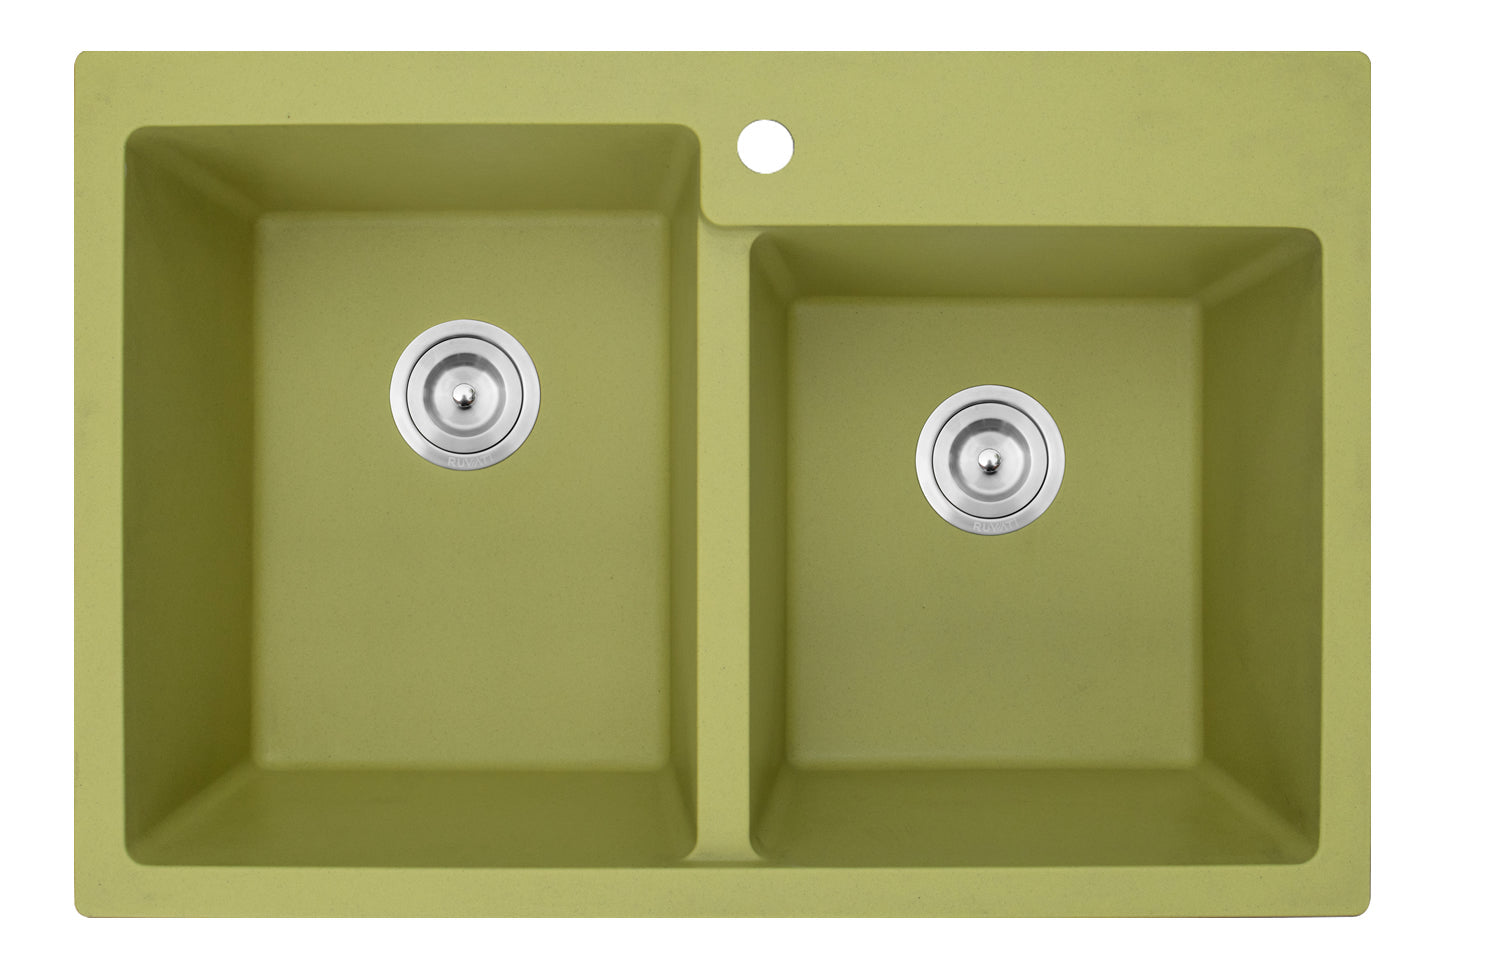 Ruvati 33 x 22" epiGranite Dual-Mount Granite Composite Double Bowl Kitchen Sink